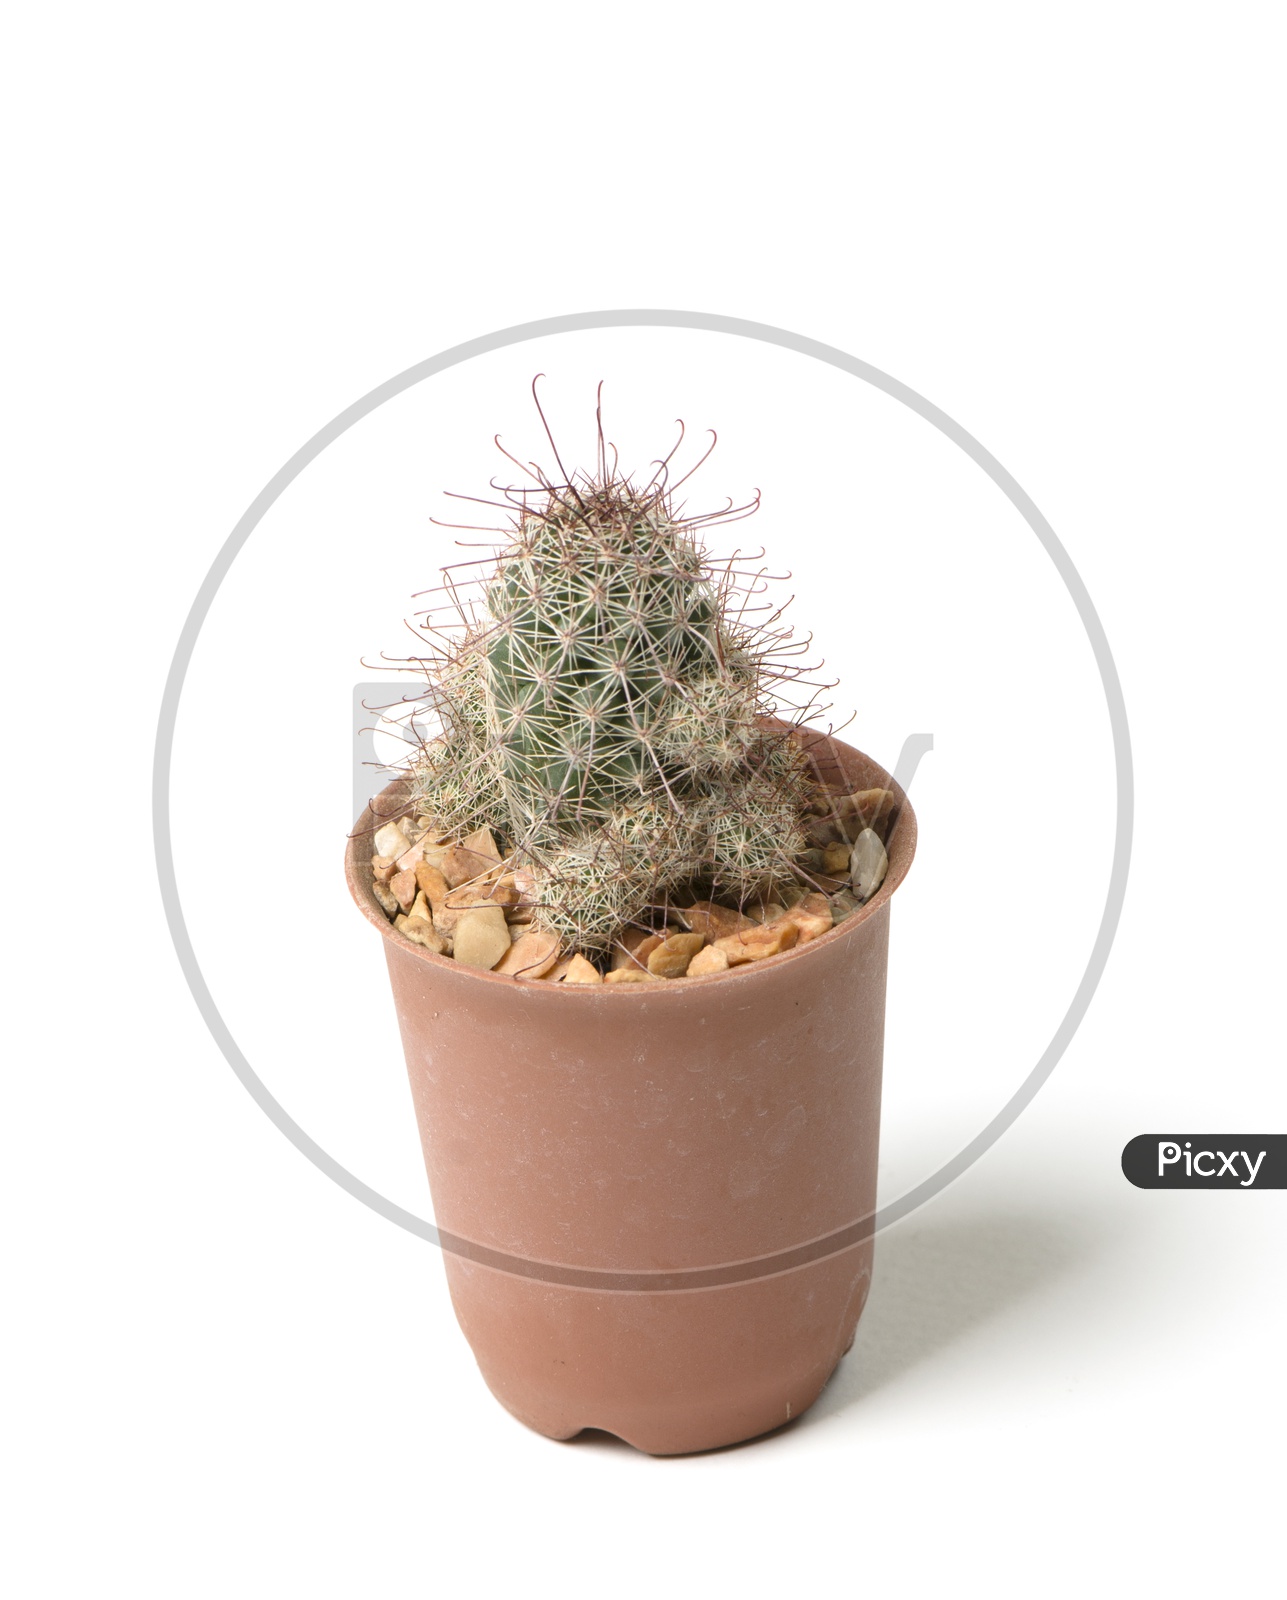 A decorative small cactus plant